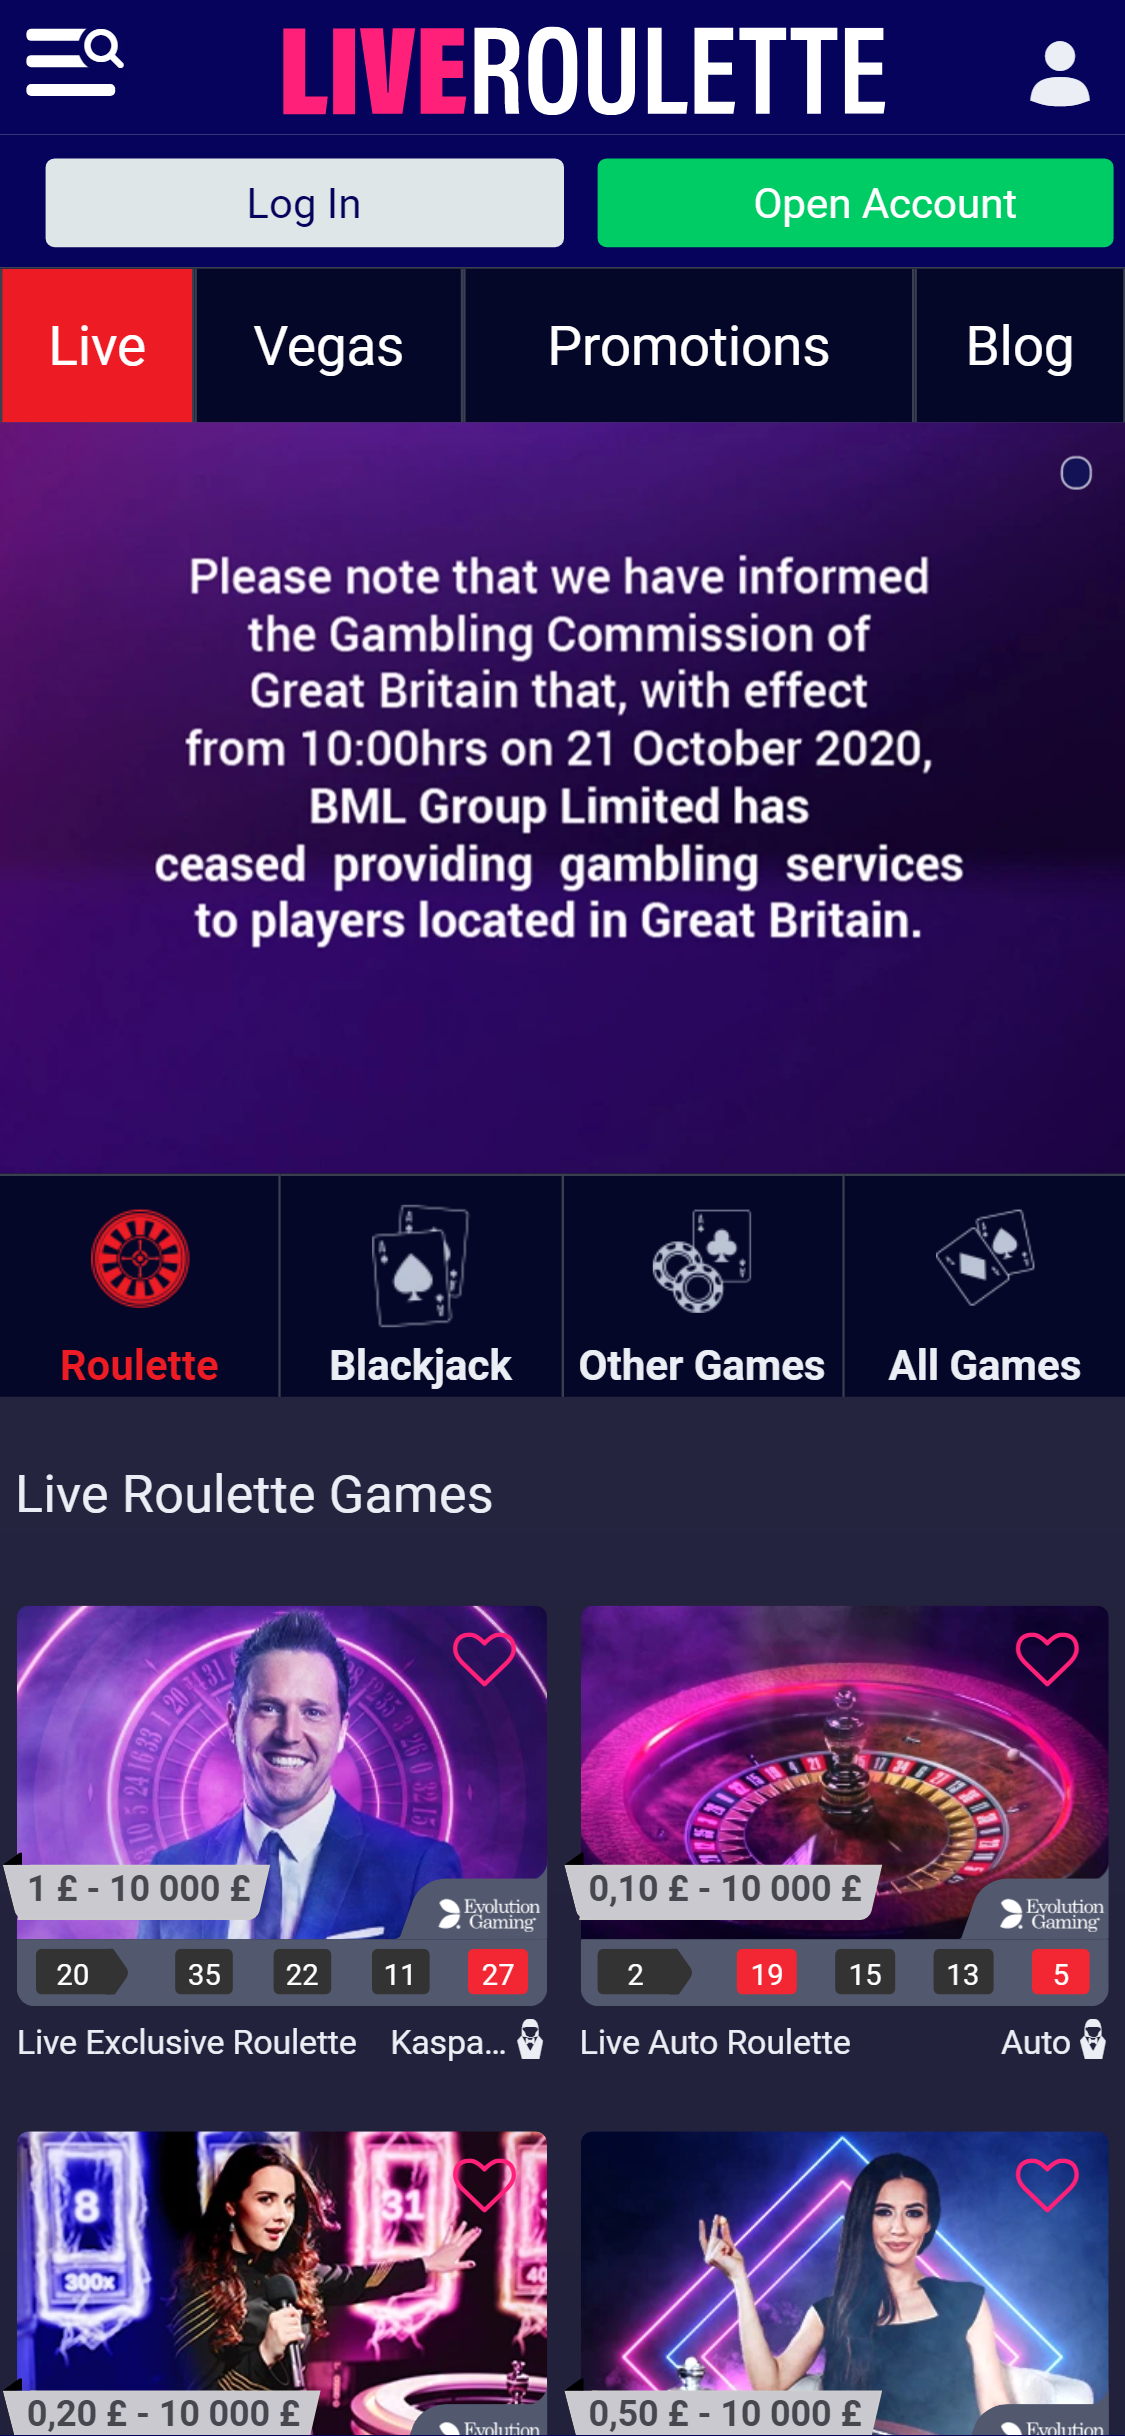 Live Roulette Casino Mobile Live Dealer Games Review